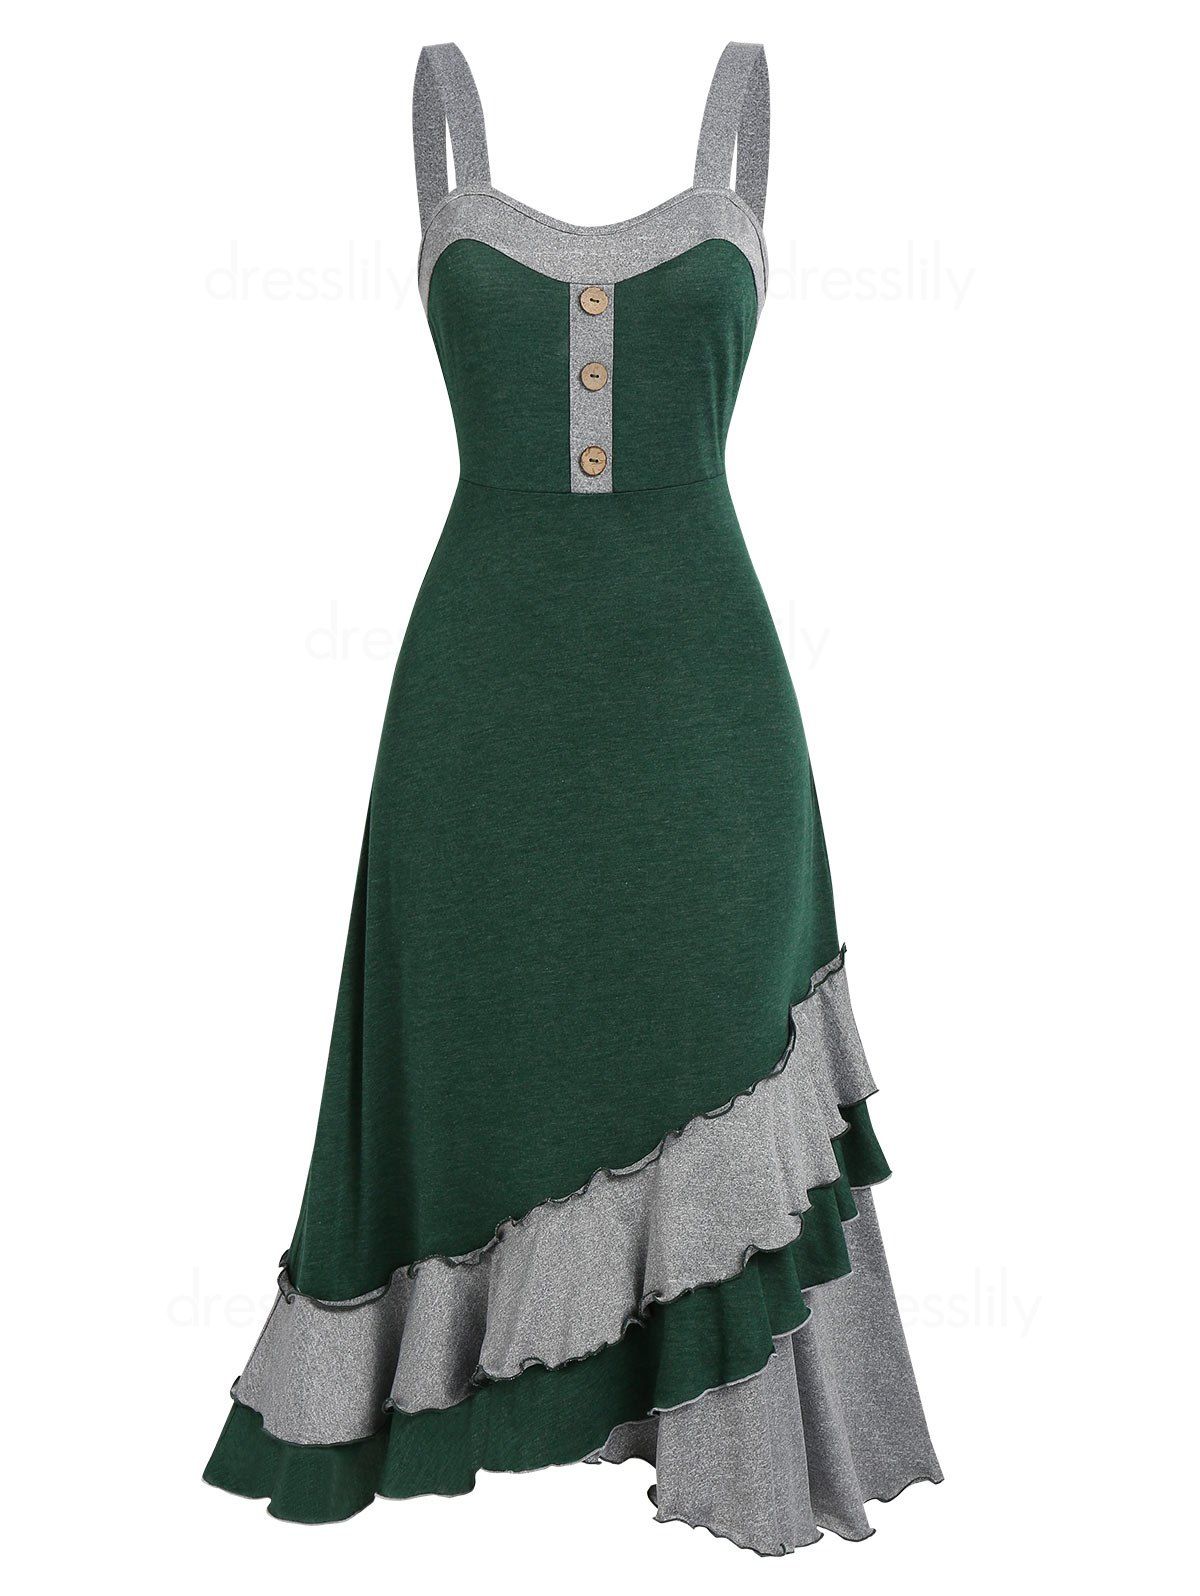 Summer Contrast Colorblock Layered Ruffle Cami Mid Calf Dress - MEDIUM SEA GREEN M